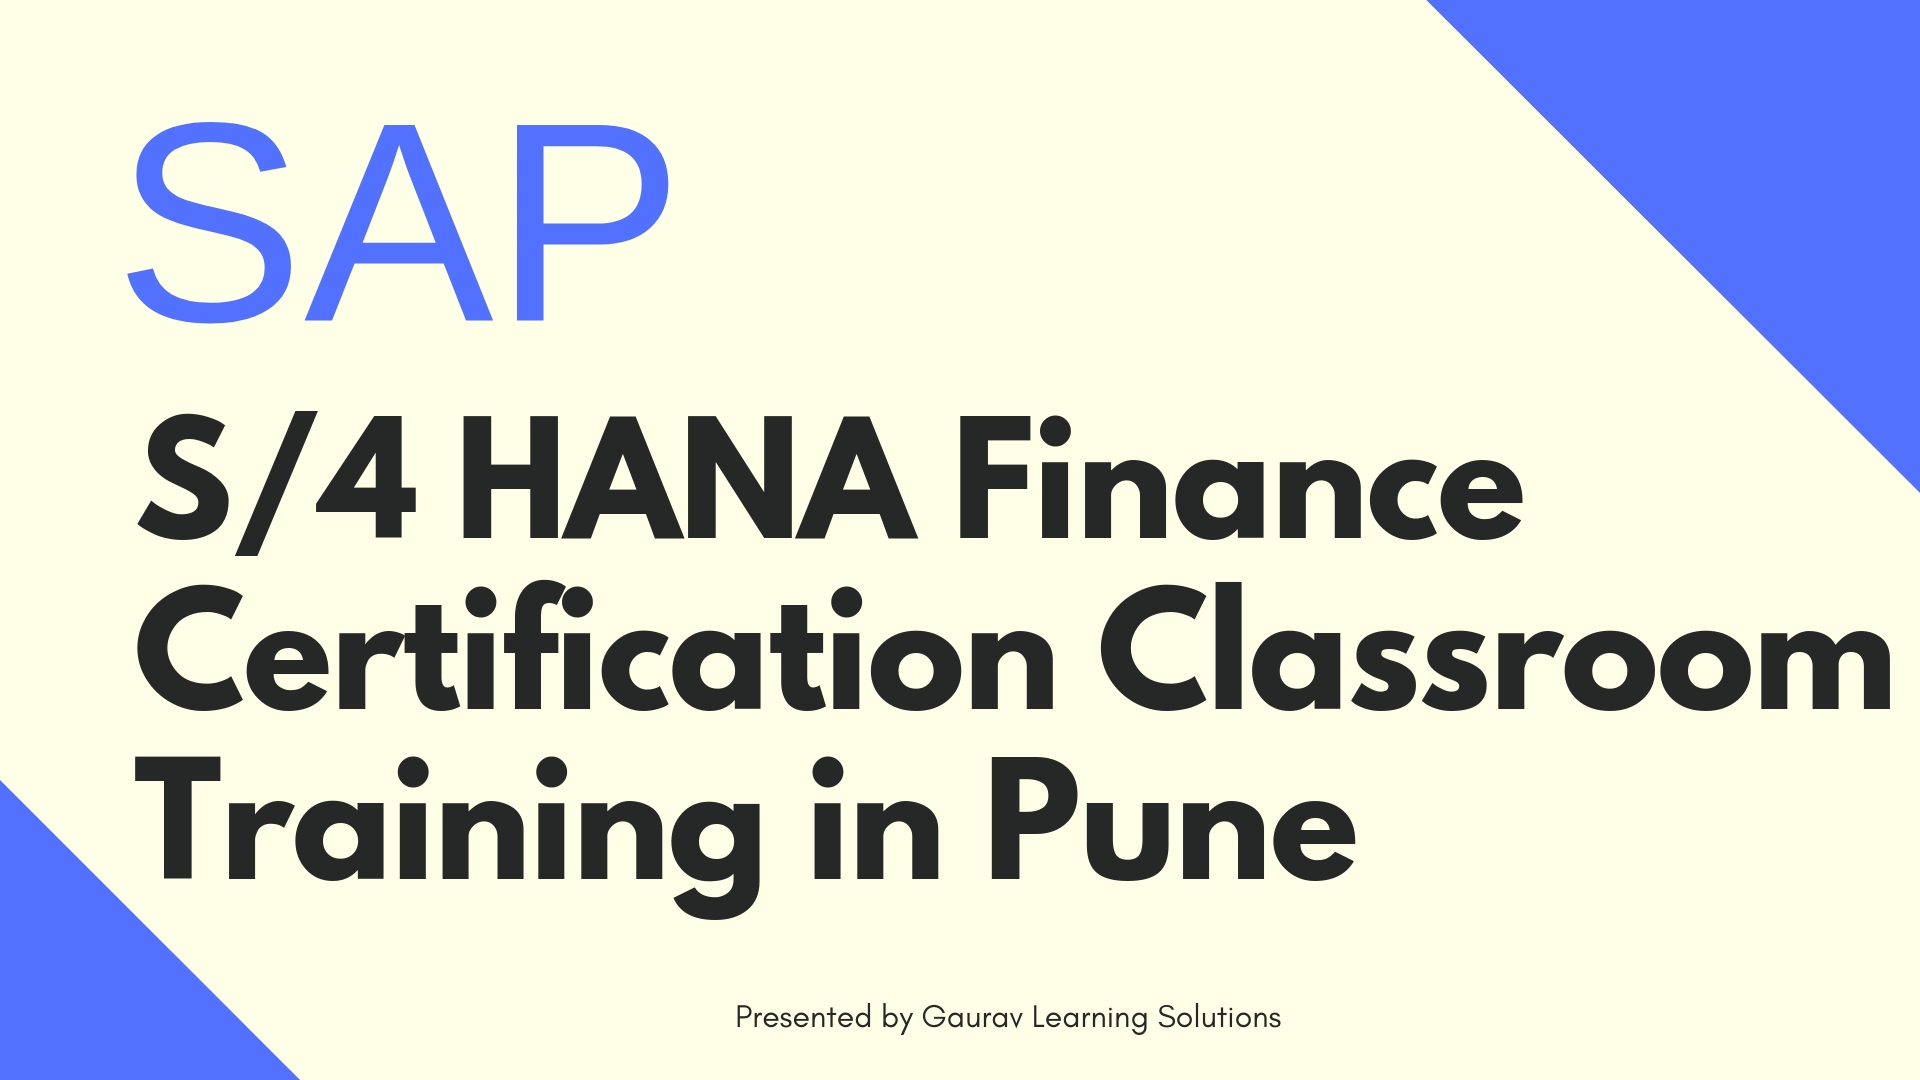 SAP S/4 HANA Finance Certification Classroom Training in Pune, Pune, Maharashtra, India